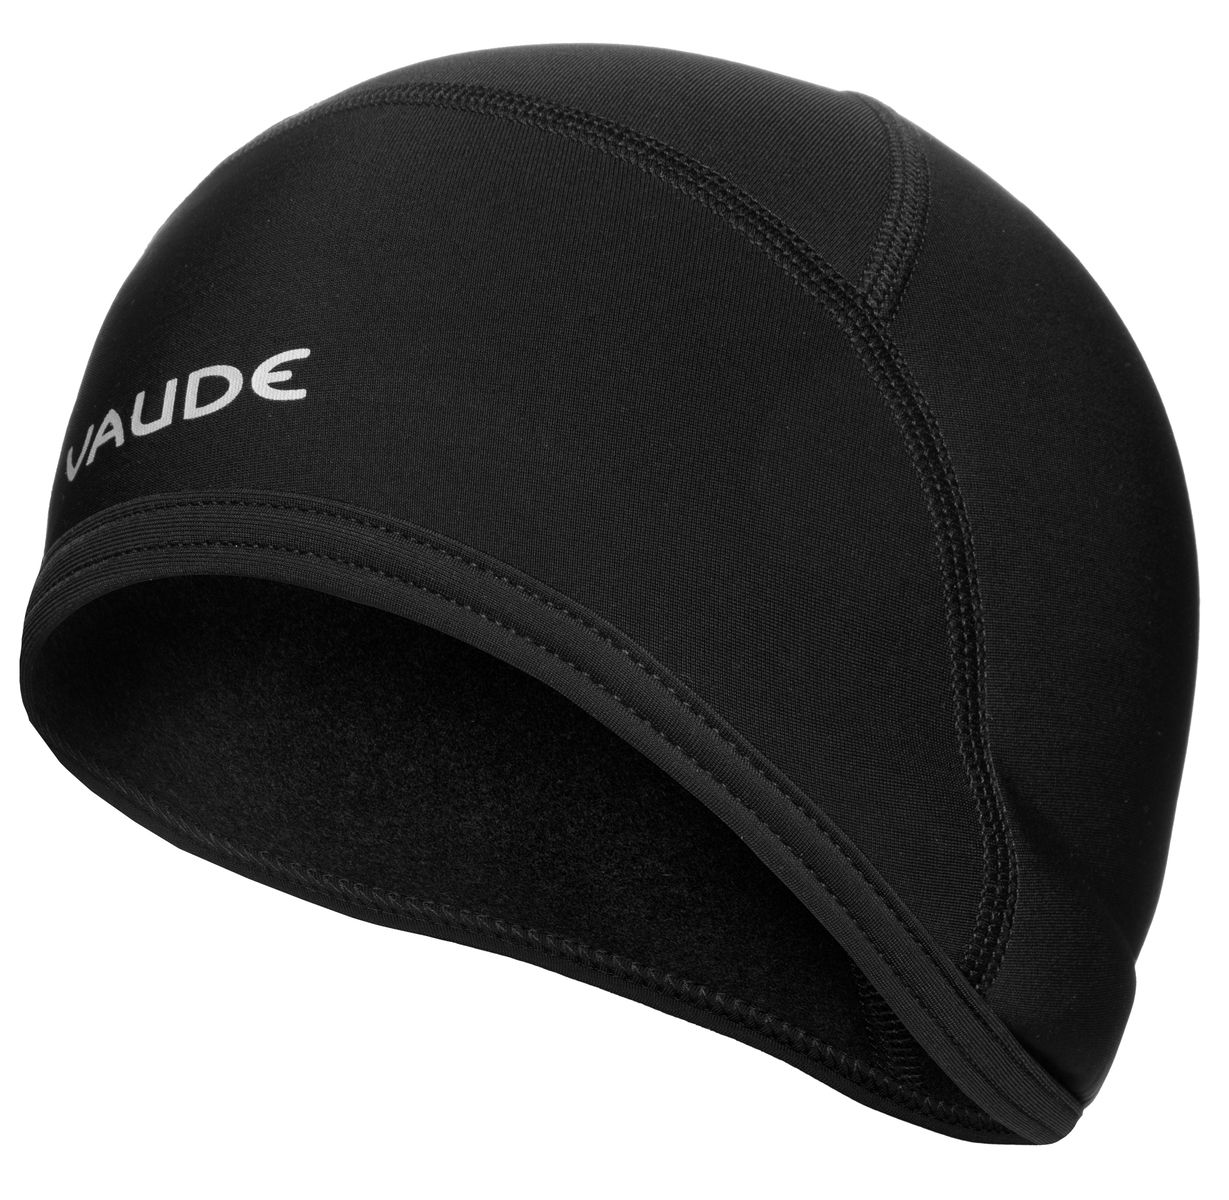 Vaude Bike Warm Cap helmet underwear cap